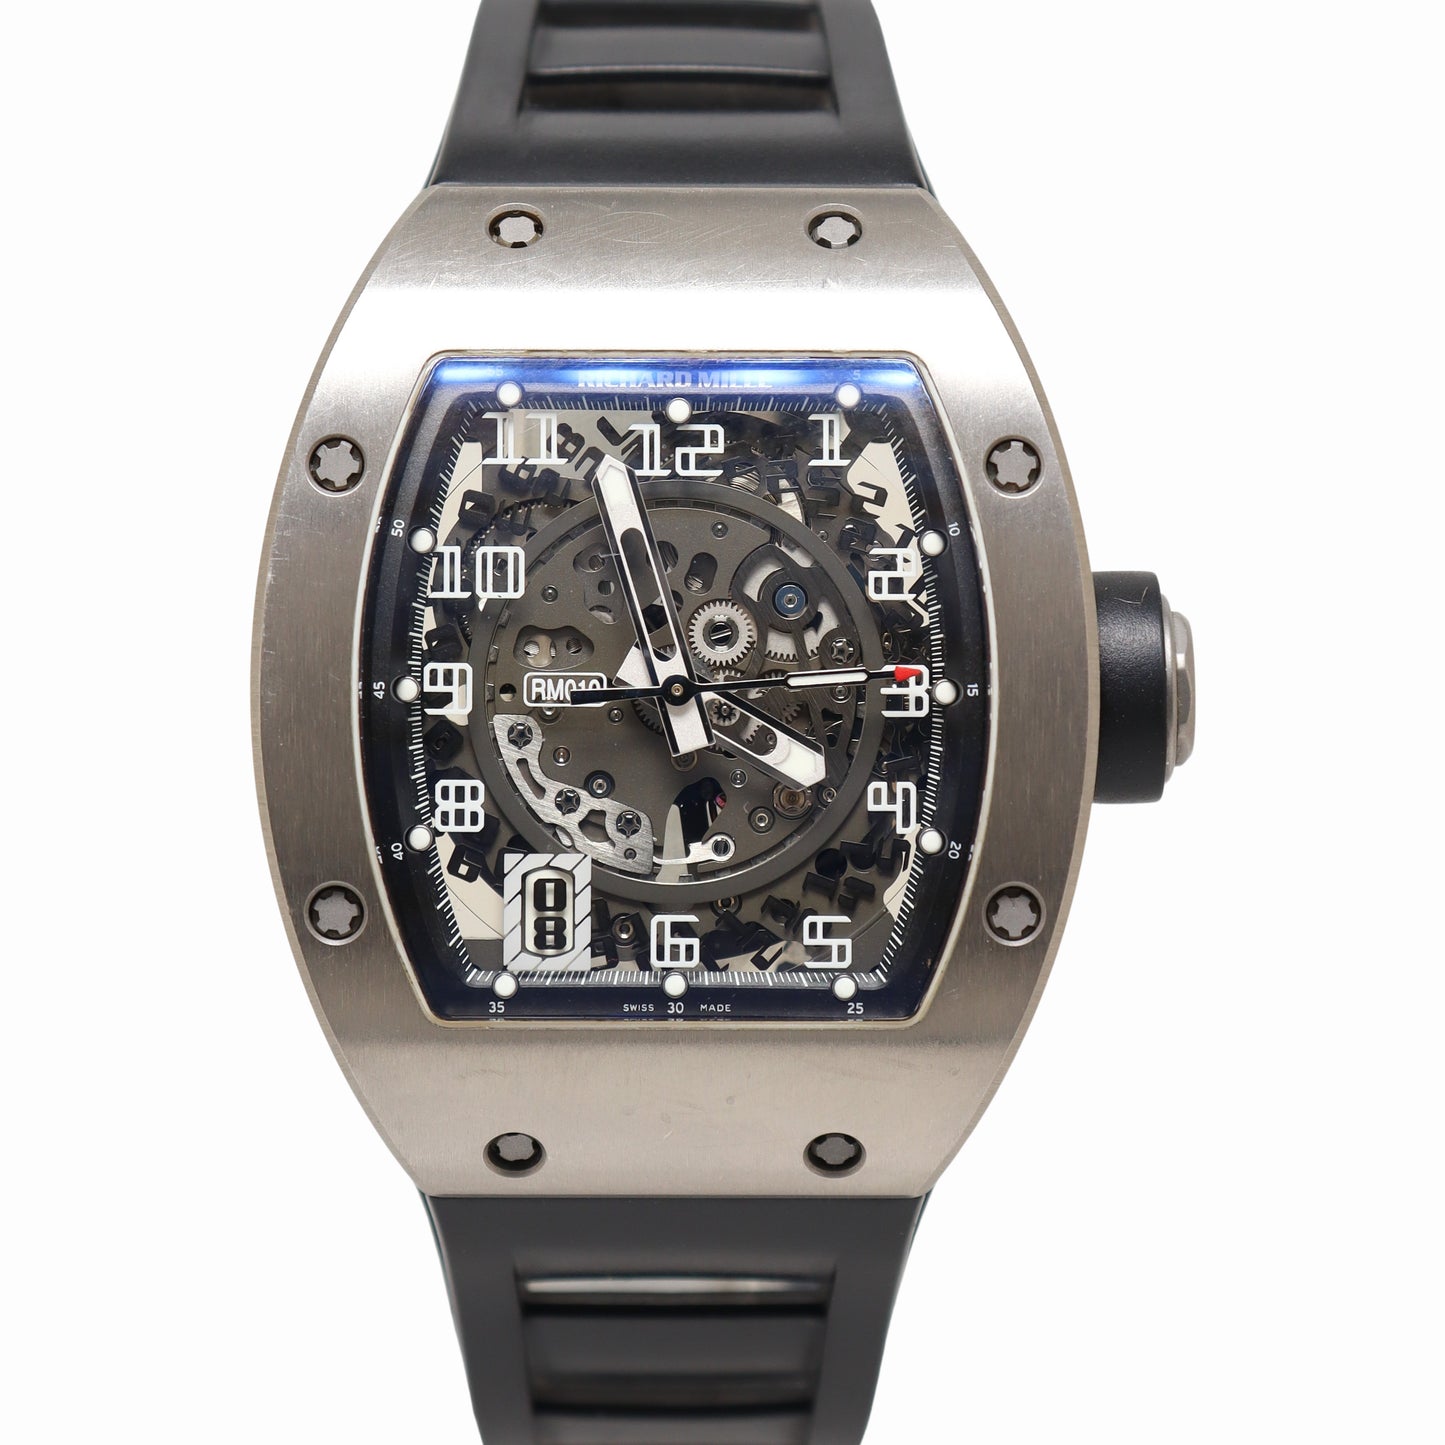 Richard Mille RM-010 AL Ti Titanium 38x45mm Skeleon Arabic Dial Watch Reference #: RM010 AlTi